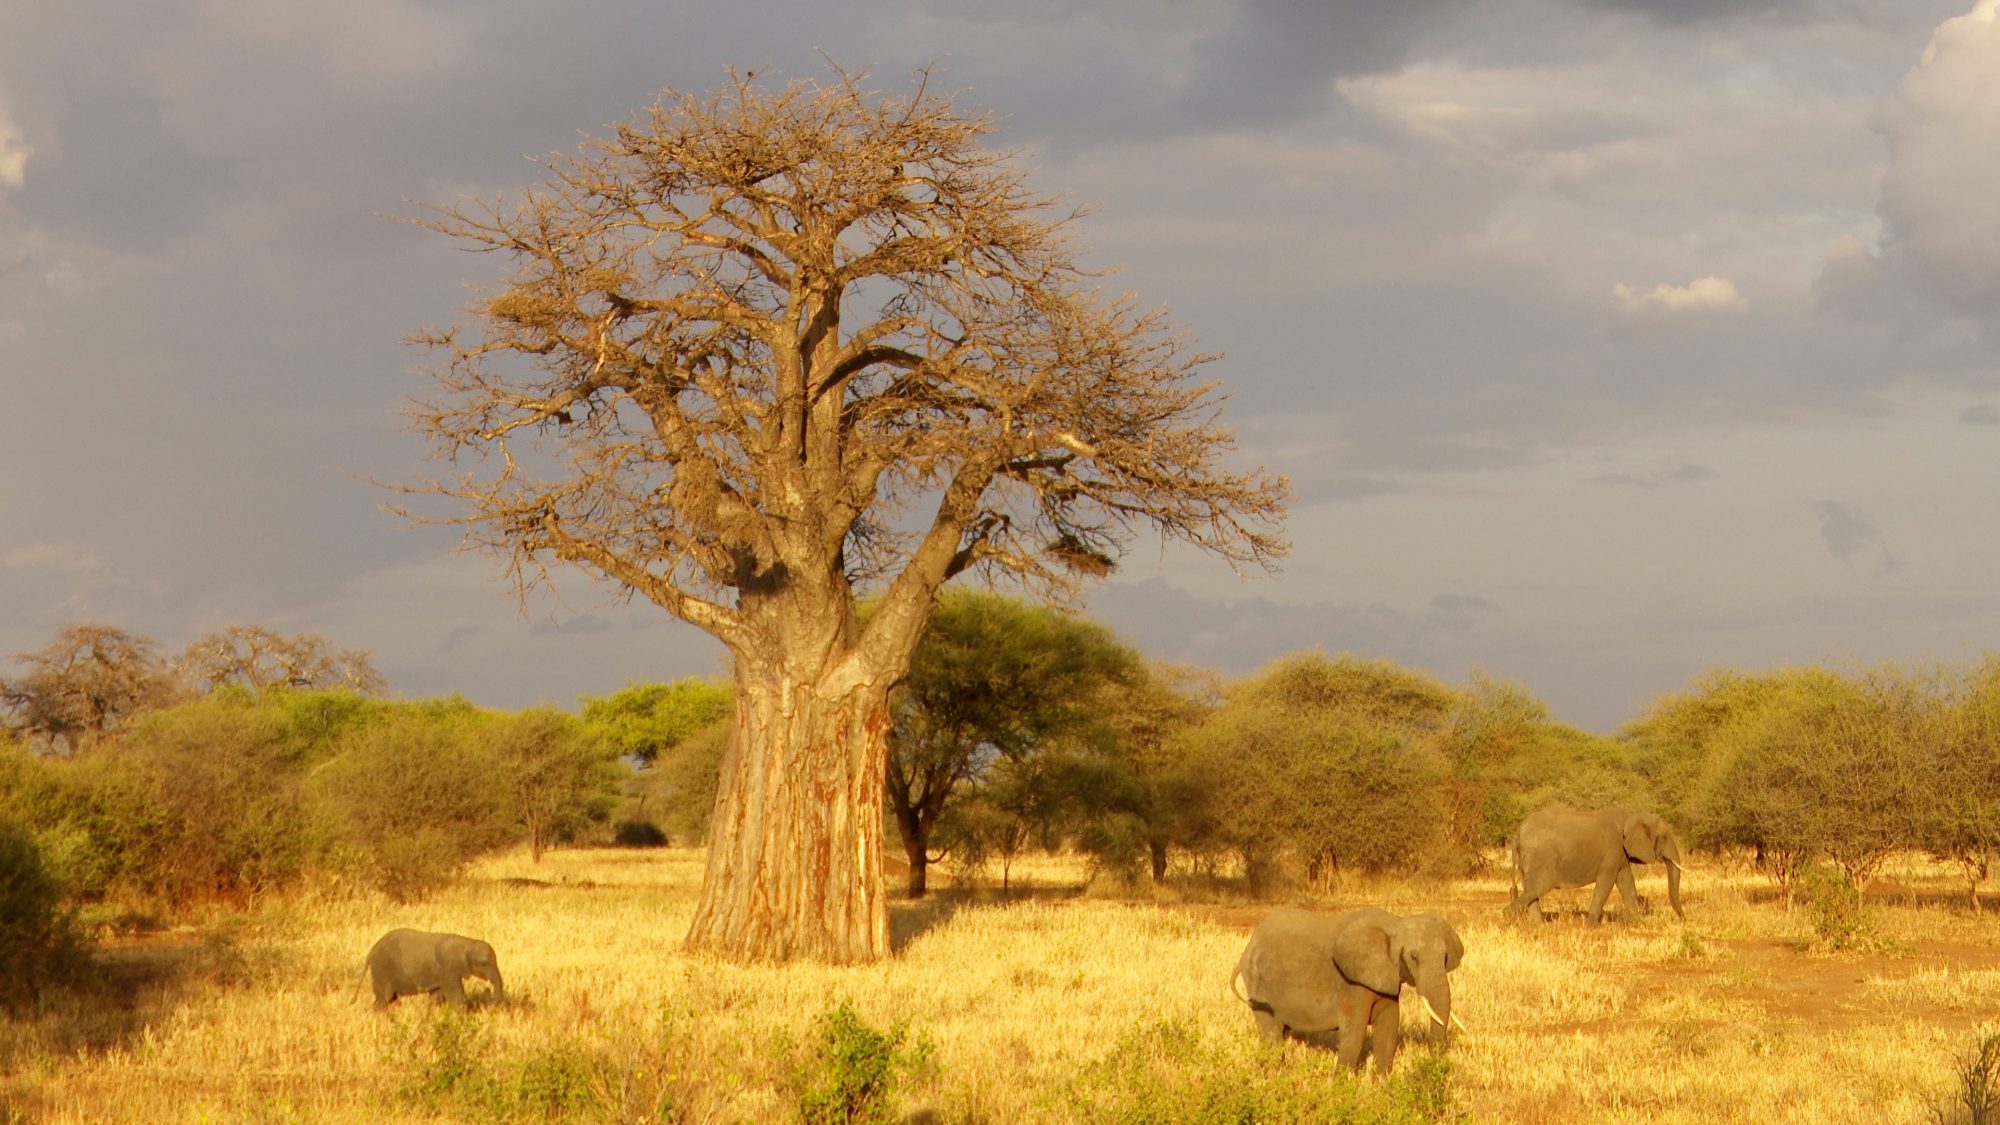 Elephants around the baobab tree – Tanzania, 2019